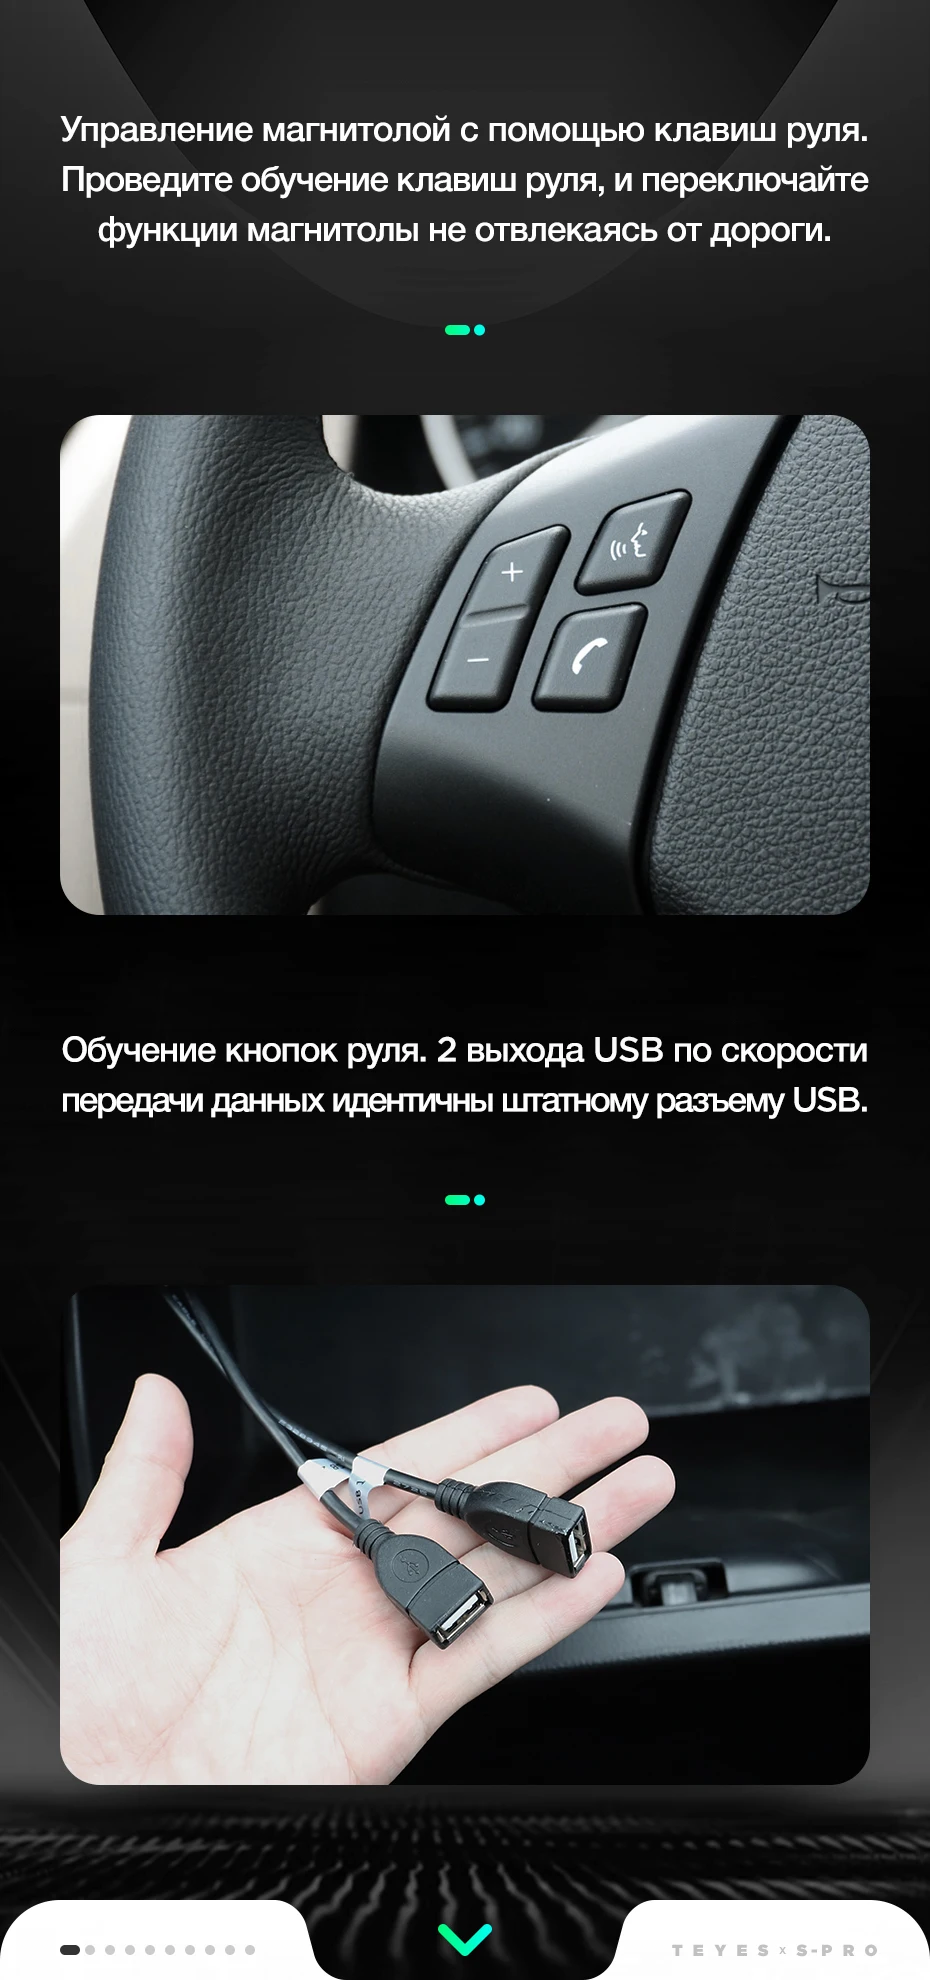 TEYES SPRO Штатная магнитола для БМВ Х1 E84BMW X1 E84 2009-2012 Android 8.1, до 8-ЯДЕР, до 4+ 64ГБ 32EQ+ DSP 2DIN автомагнитола 2 DIN DVD GPS мультимедиа автомобиля головное устройство